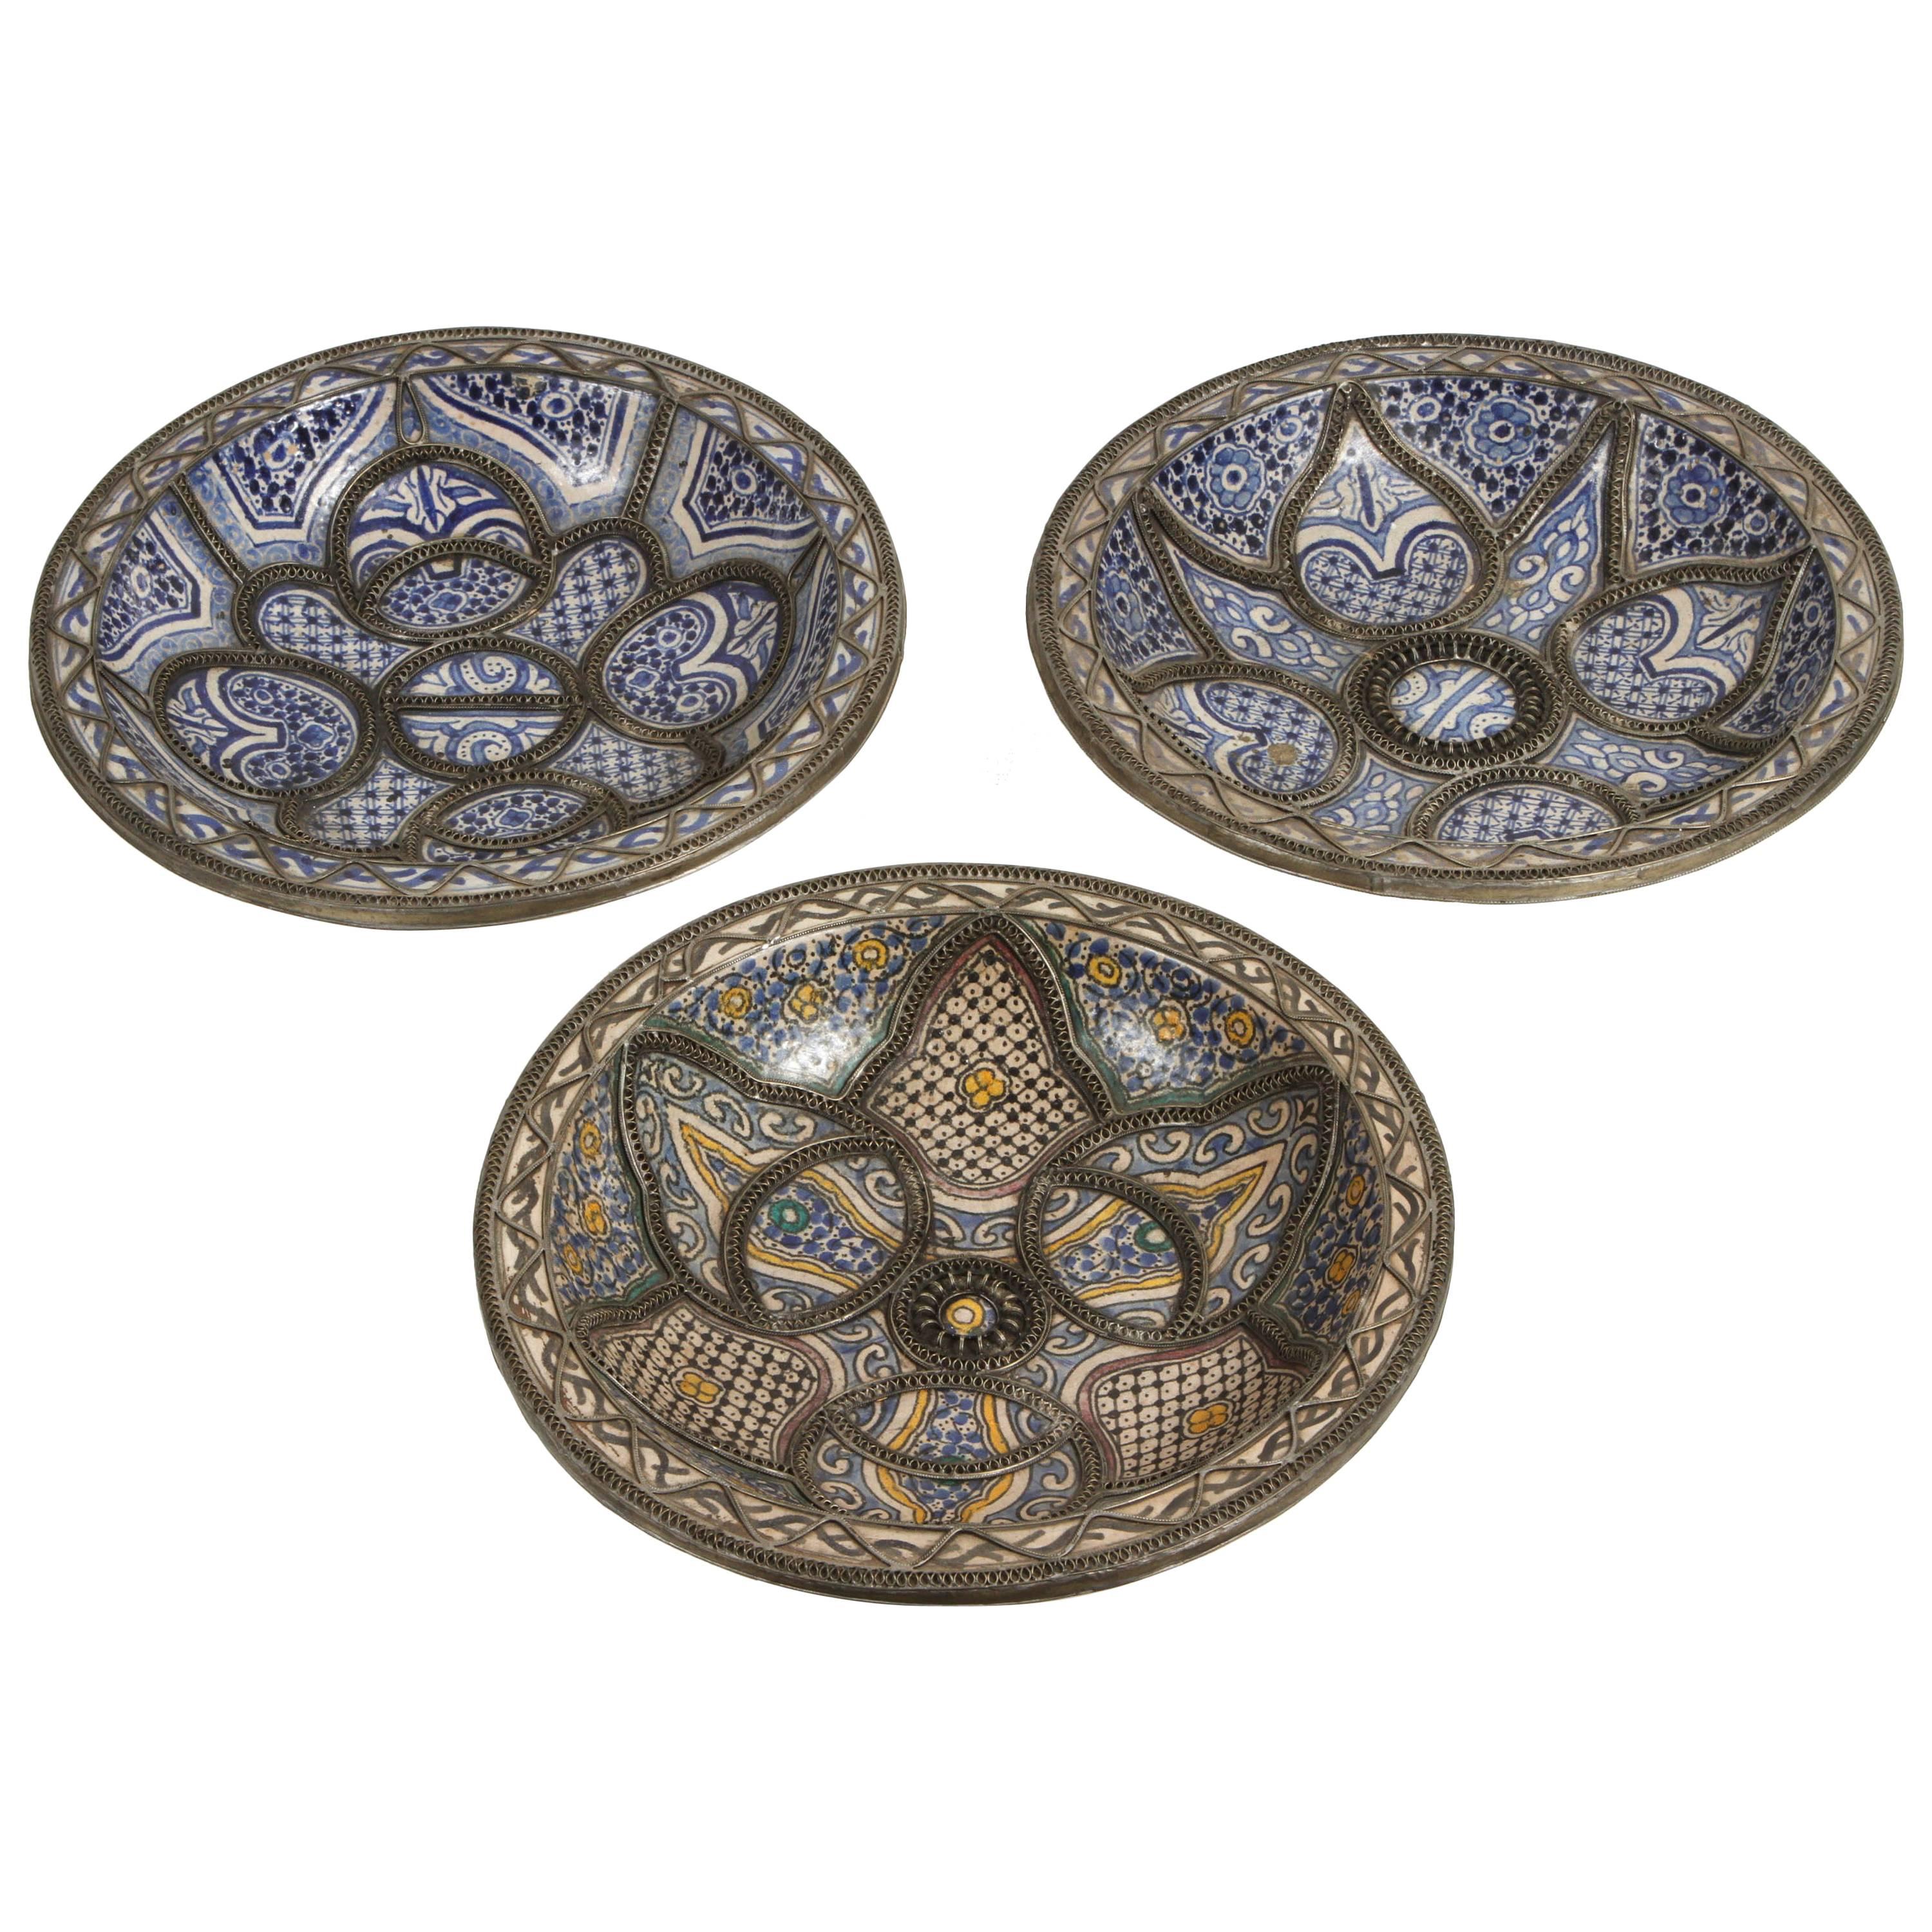 Large Decorative Ceramic Plates from Fez